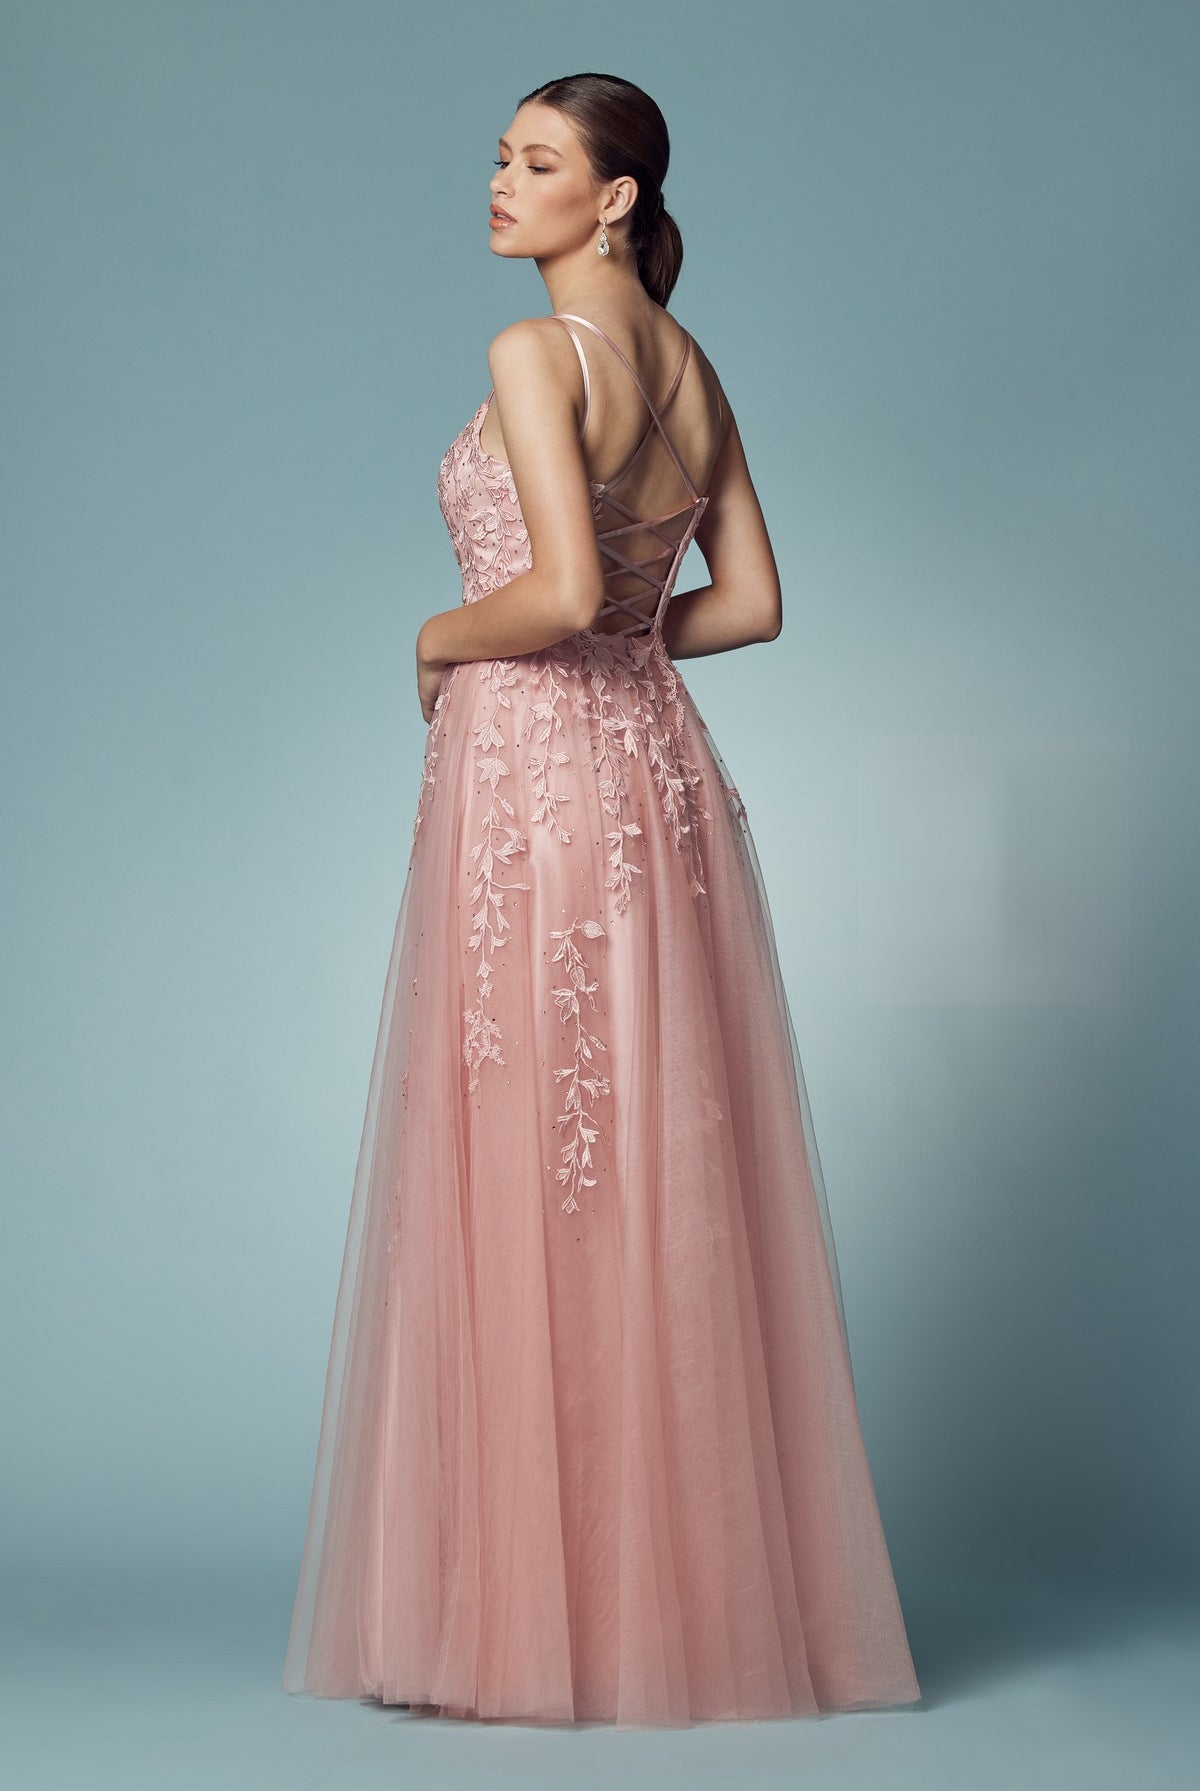 Floral Design Spaghetti Straps Long Bridesmaid & Prom Dress NXC415-Bridesmaid Dress-smcfashion.com